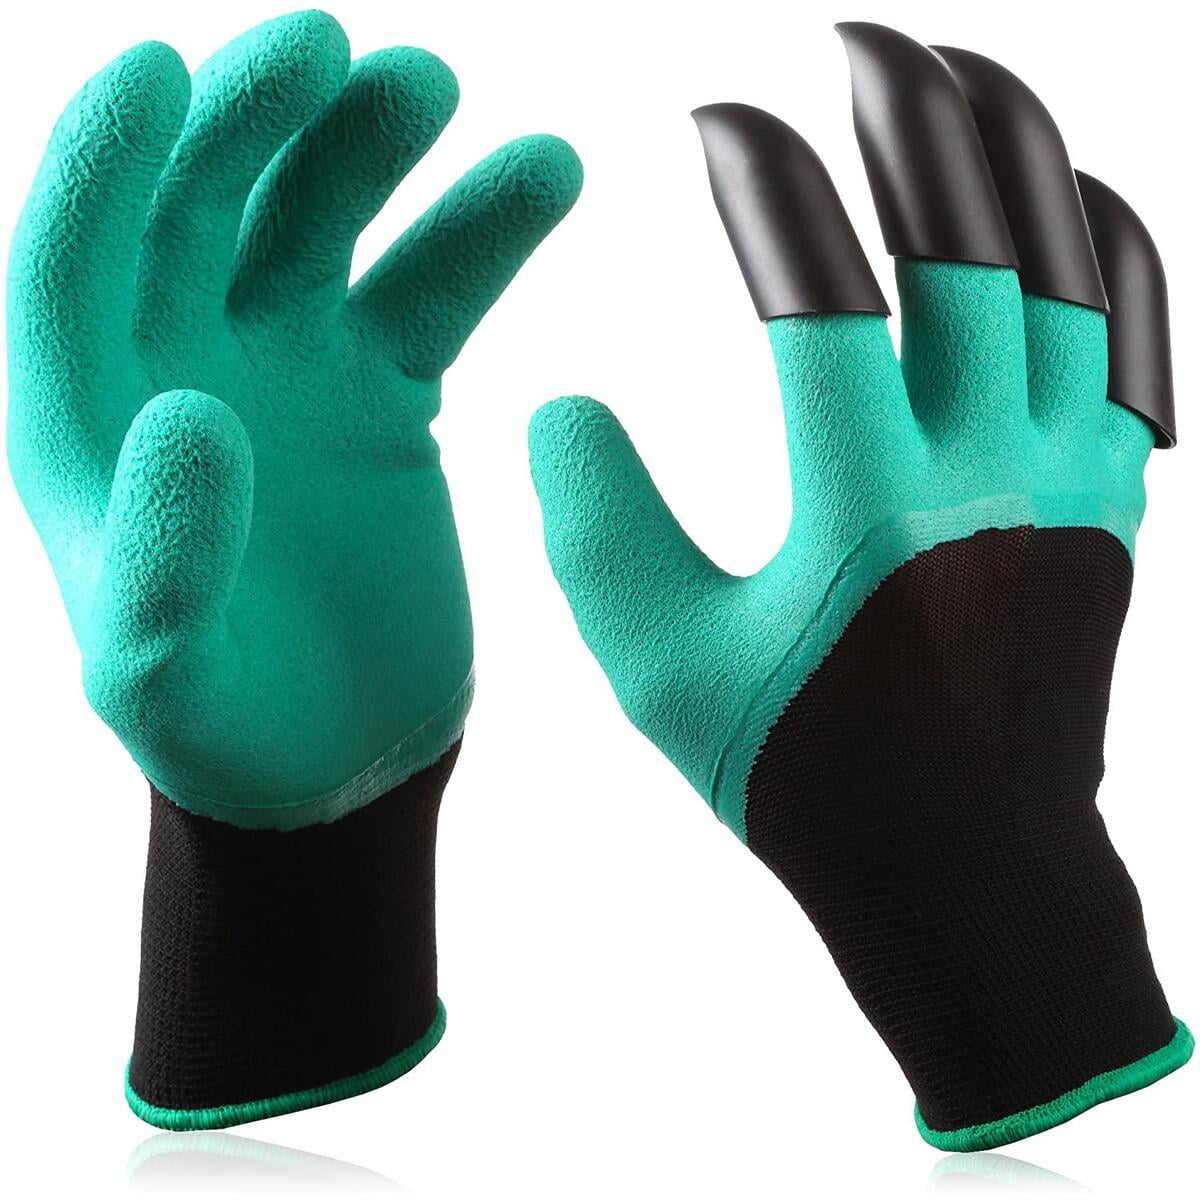 Wonder Grip Garden Gloves Anti Slip Quick Easy to Dig and Plant Safe for Rose Pruning Gloves Mittens Digging Gloves